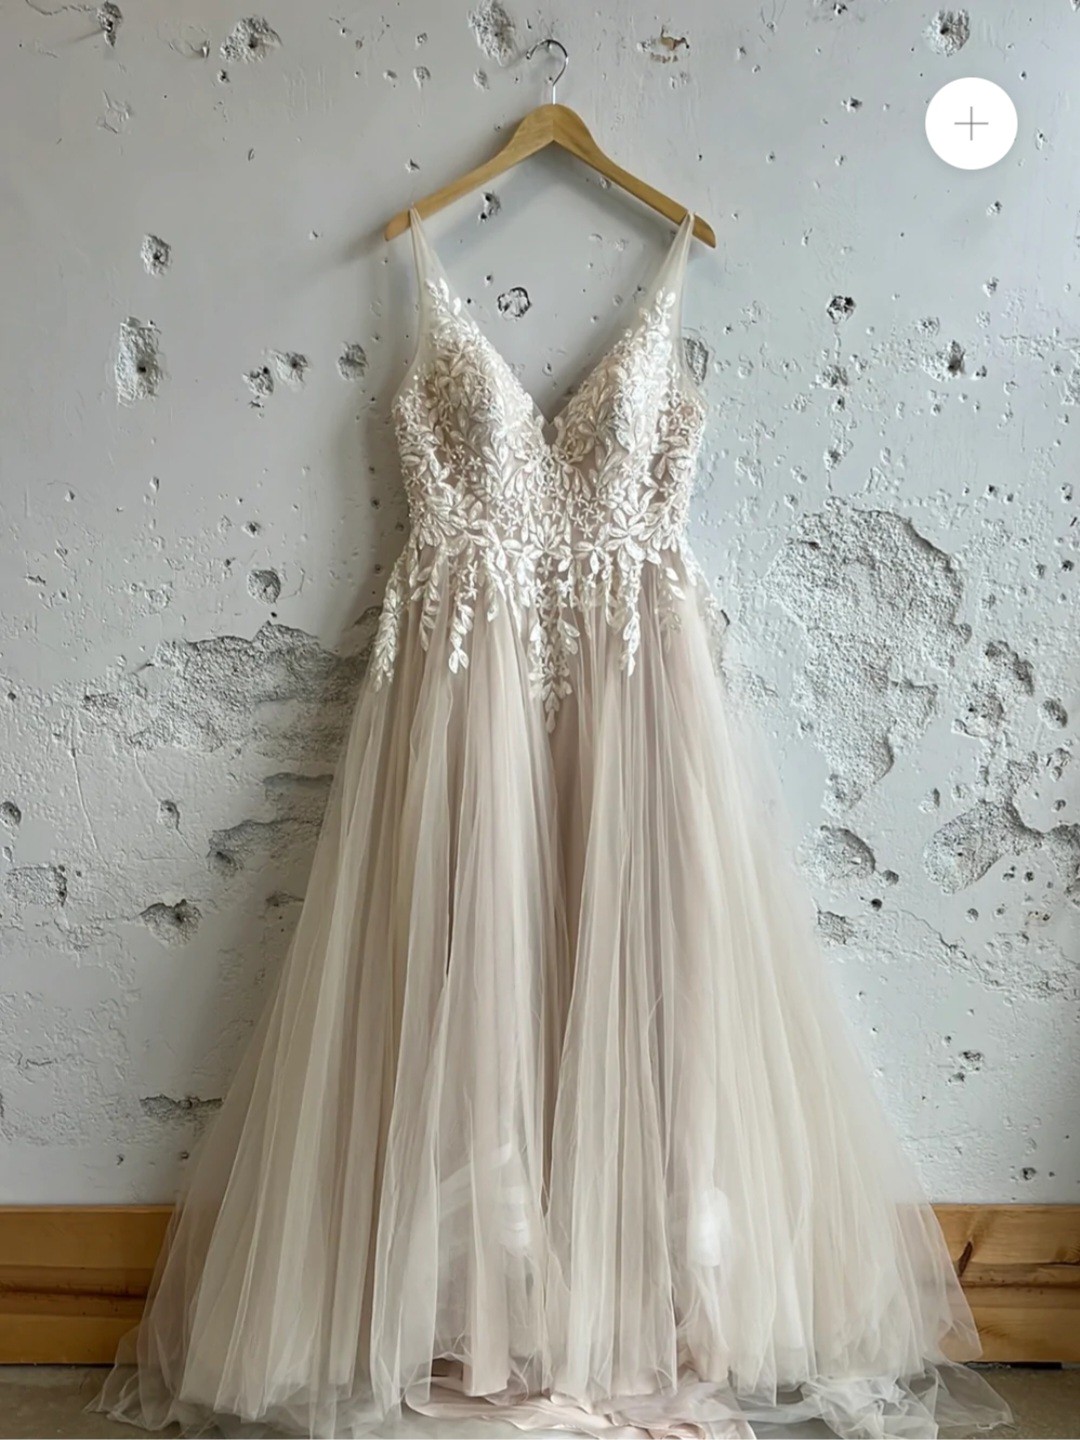 Dearly Loved Bridal New Wedding Dress Save 58% - Stillwhite